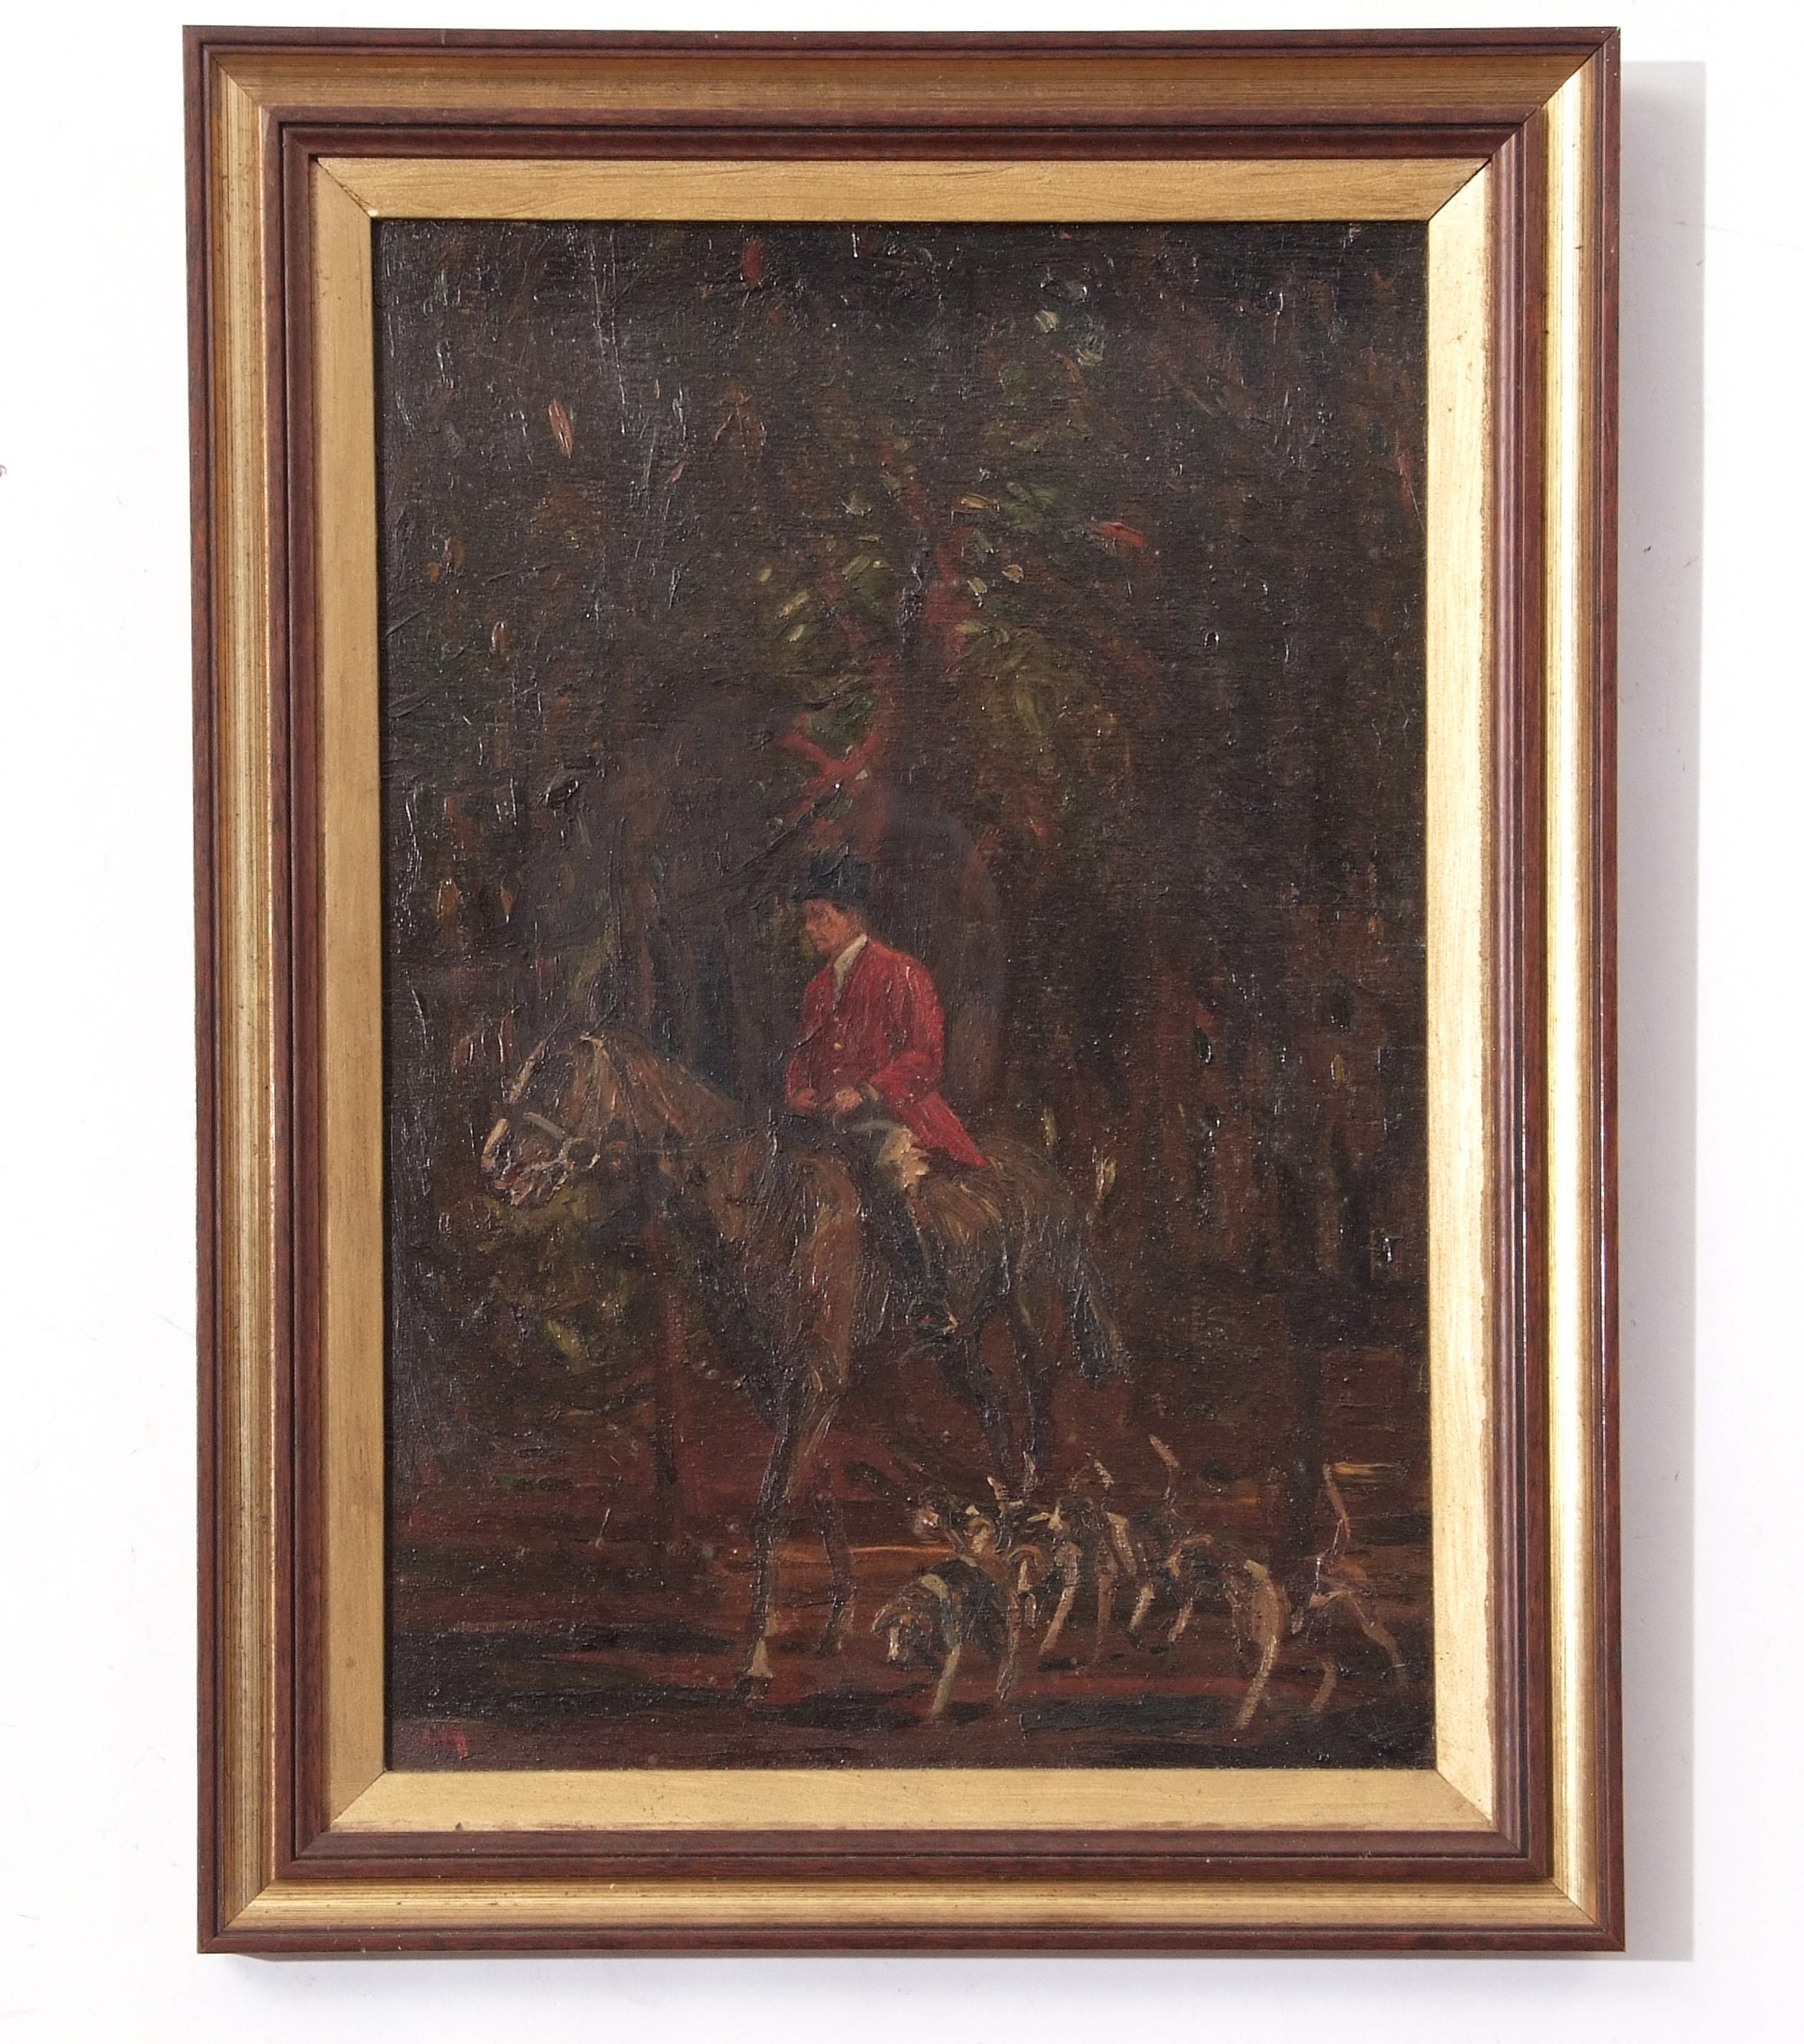 Geoffrey Mortimer (1895-1986), Hunting scene, oil on board, initialled lower left, 37 x 24cm